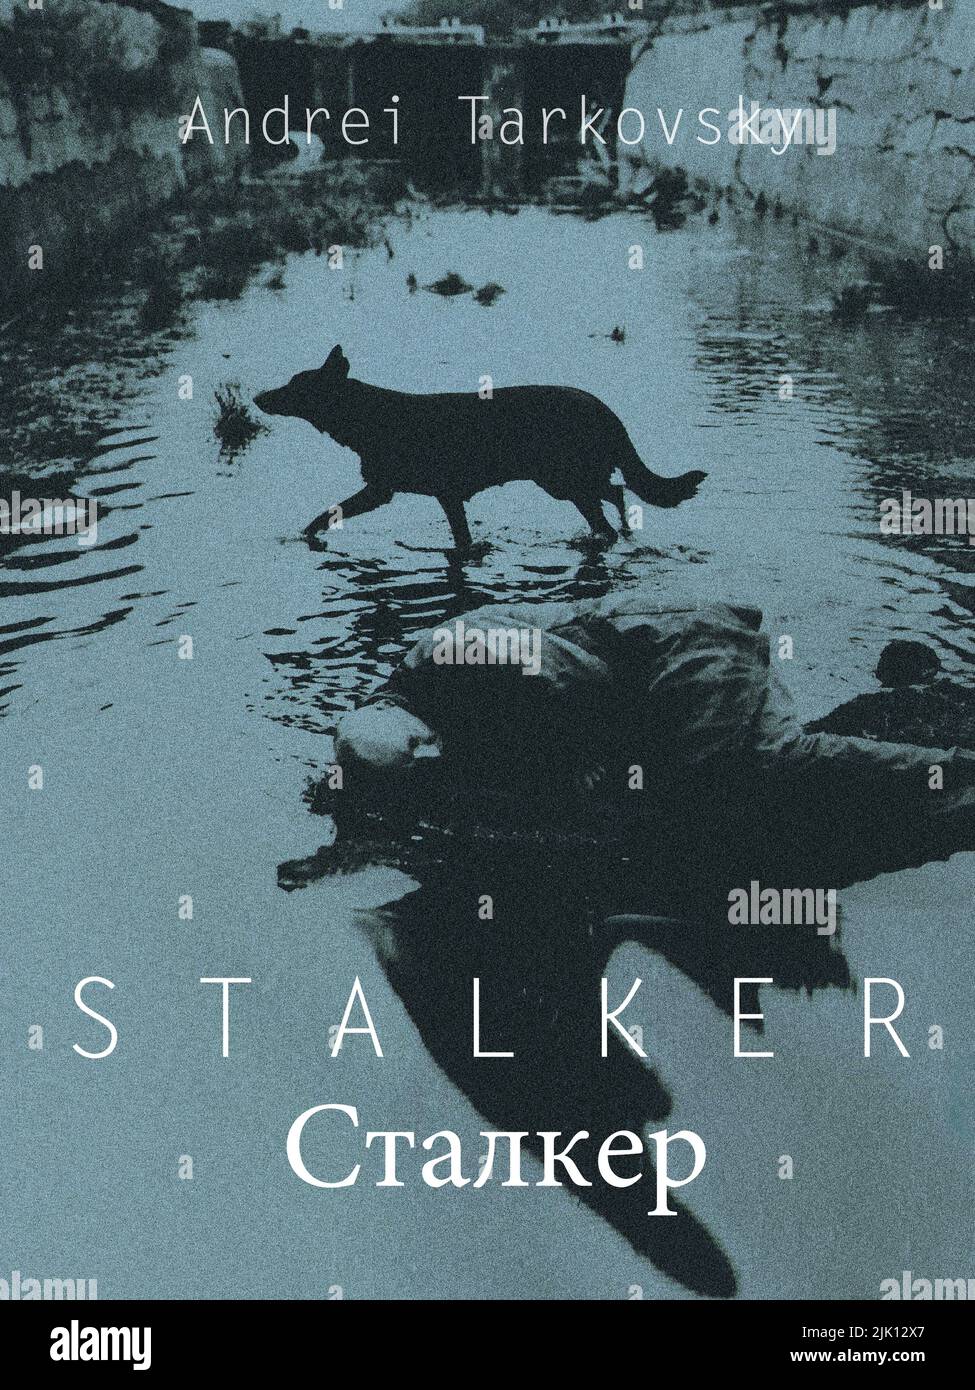 Stalker - Film Poster (Russian: Ста́лкер, 1979 Soviet science fiction art film directed by Andrei Tarkovsky written by Arkady and Boris Strugatsky Stock Photo